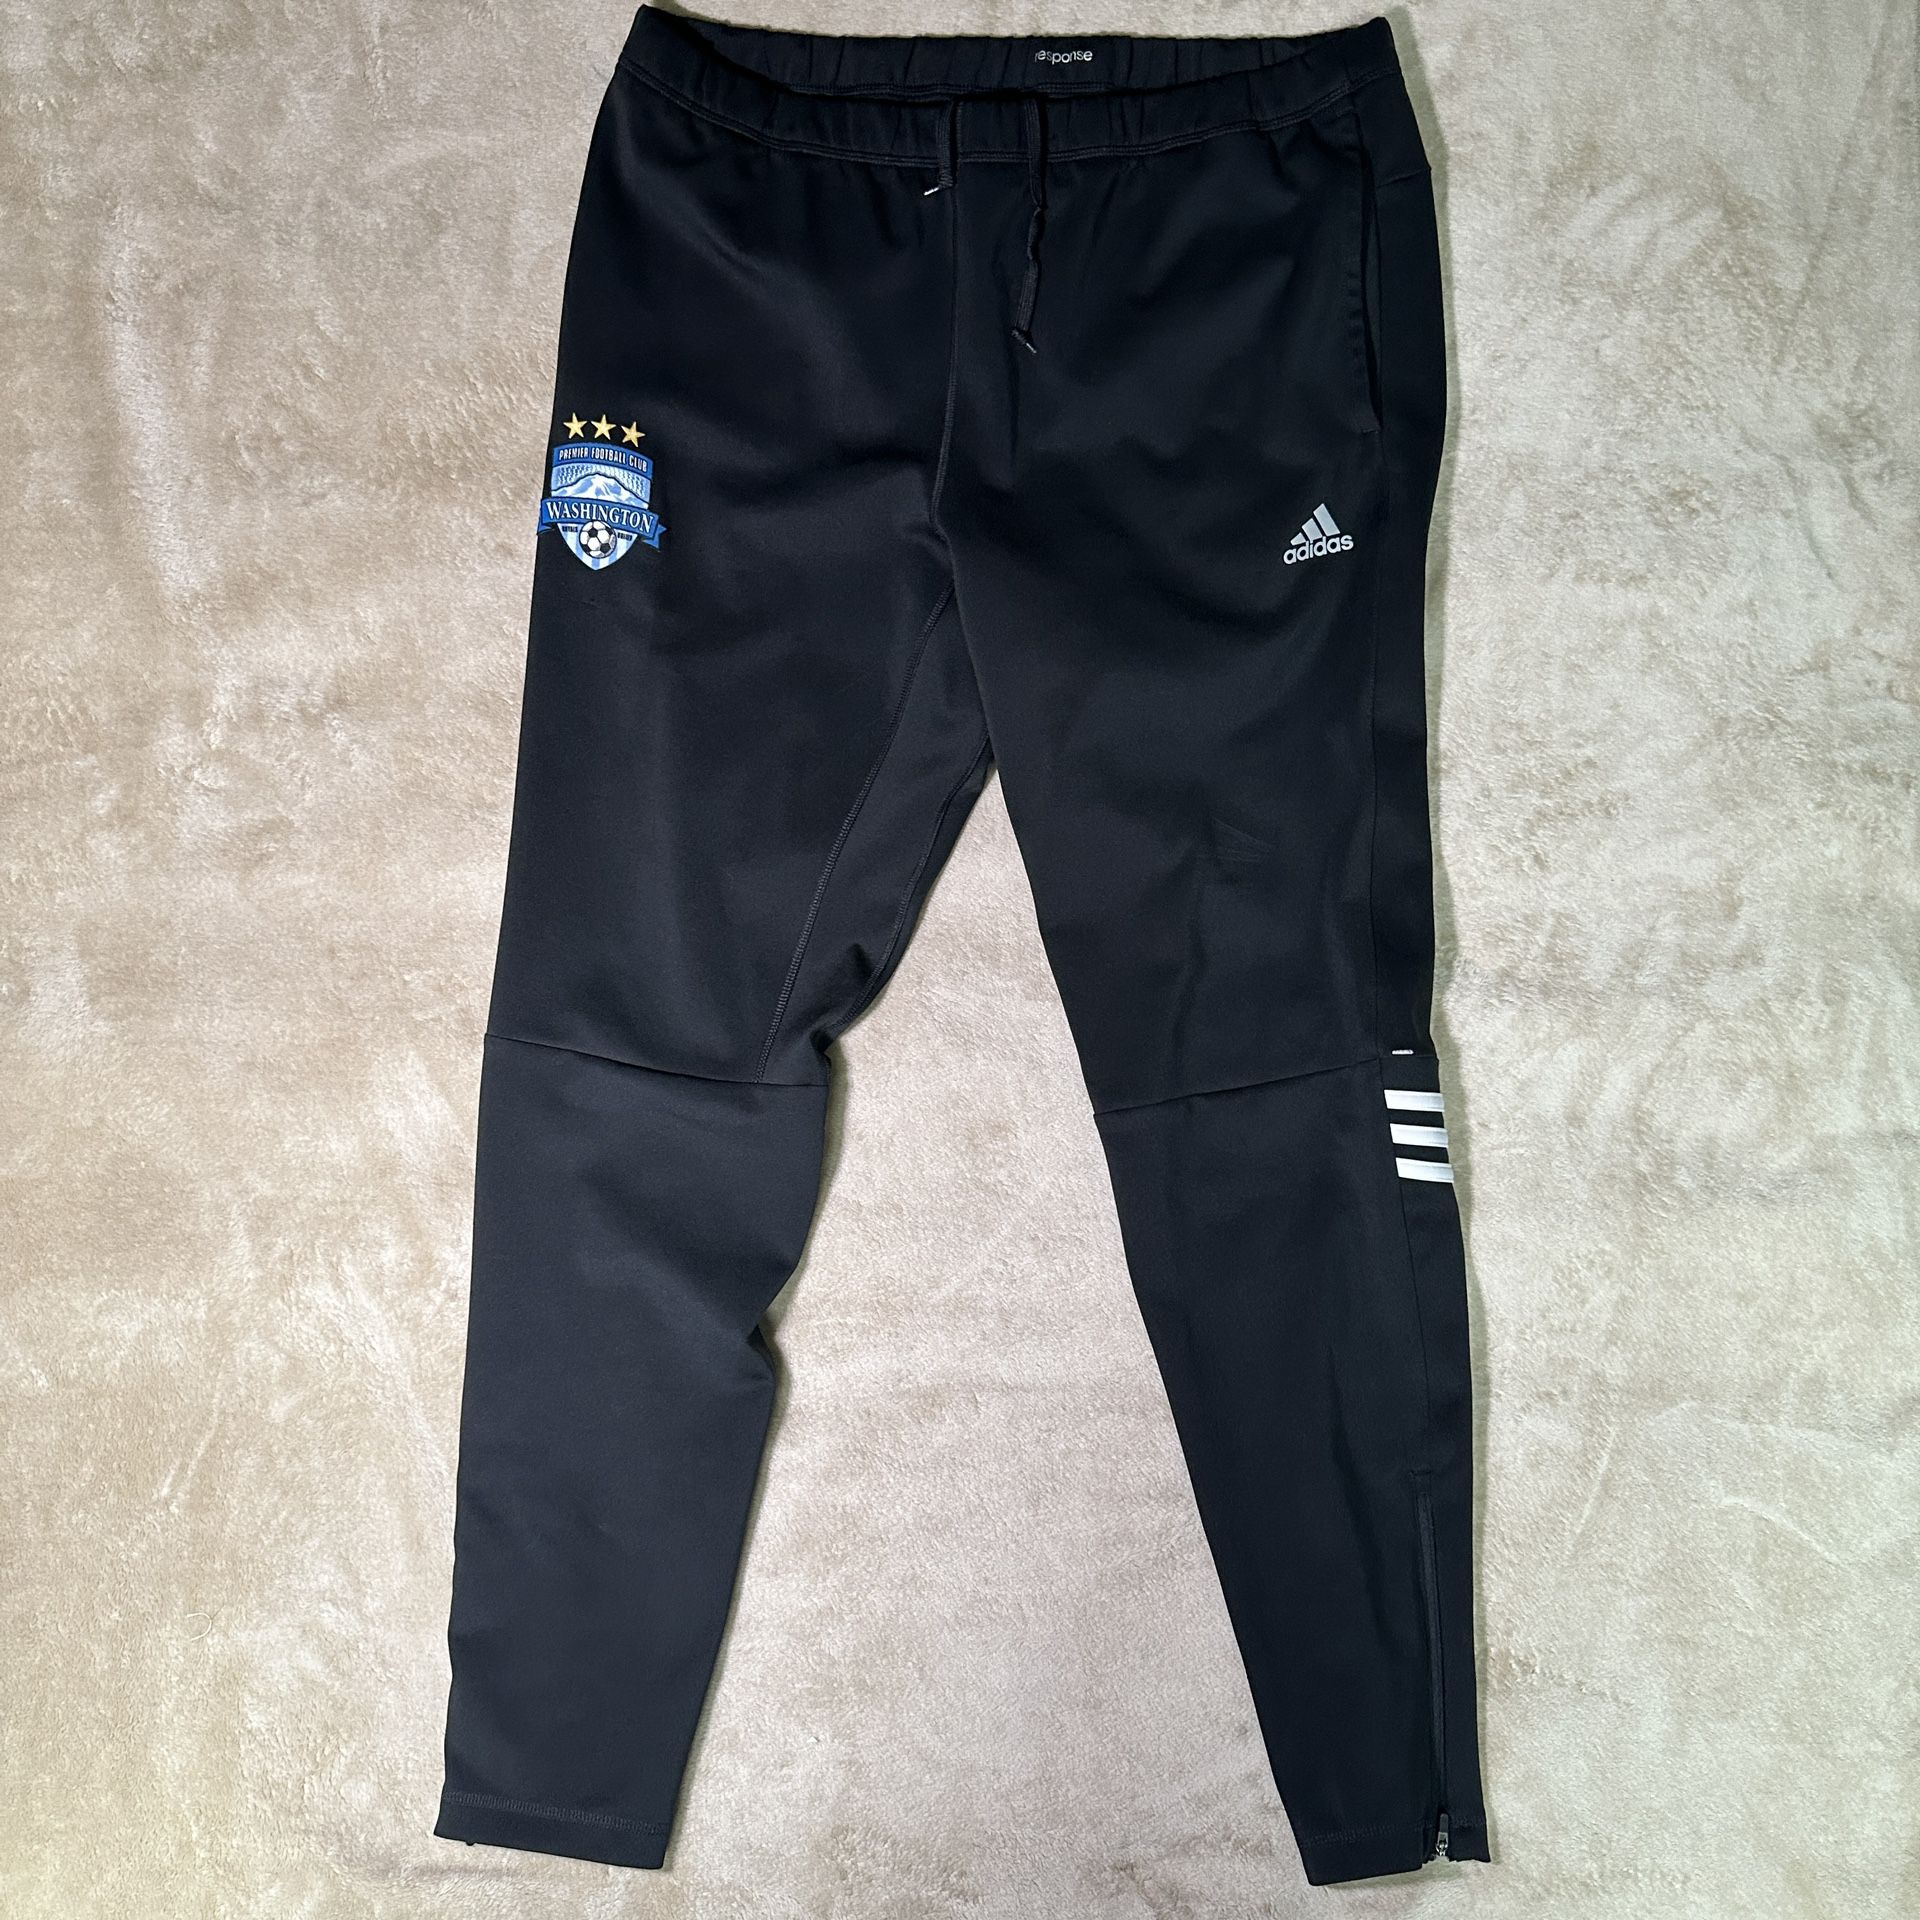 Pants Tiro Training Mens Soccer Football Adidas Size L climalite